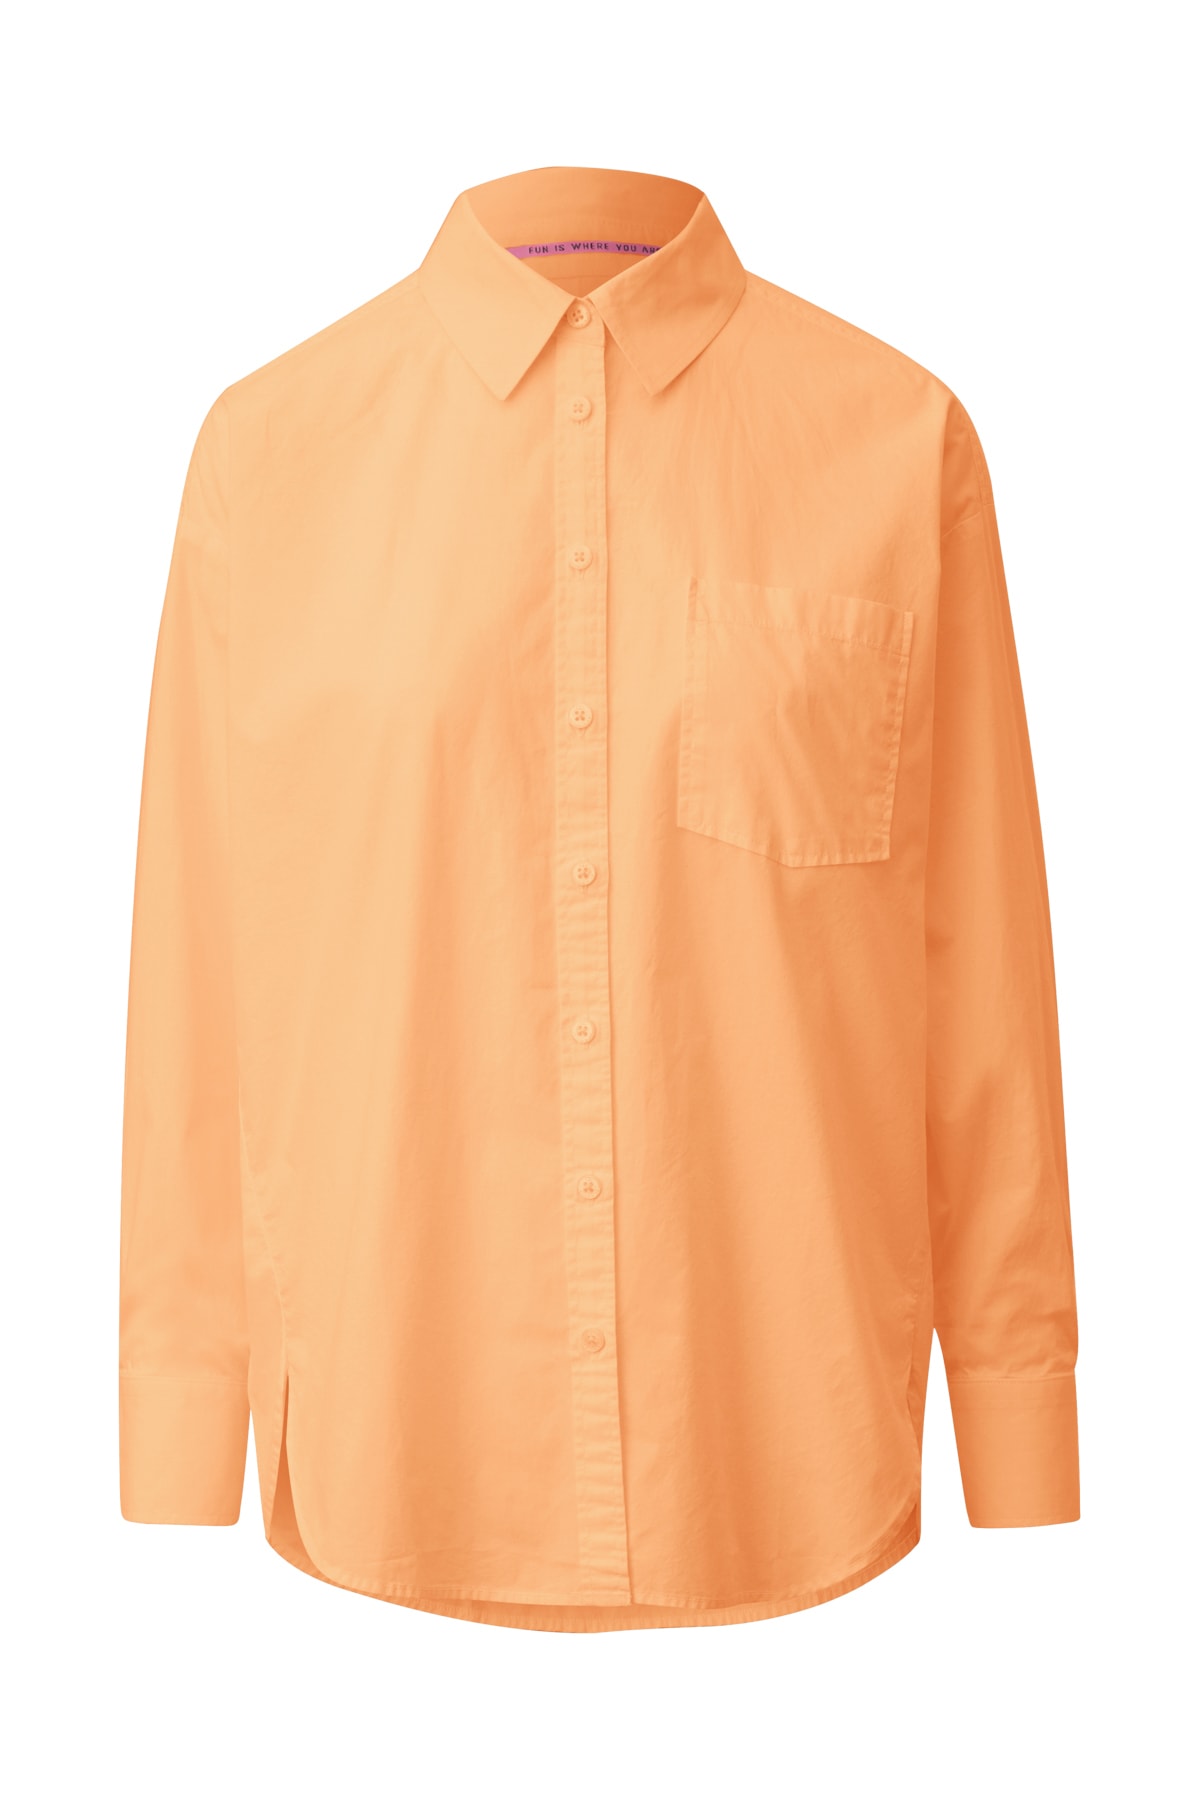 QS by s.Oliver Bluse Orange Regular Fit Fast ausverkauft